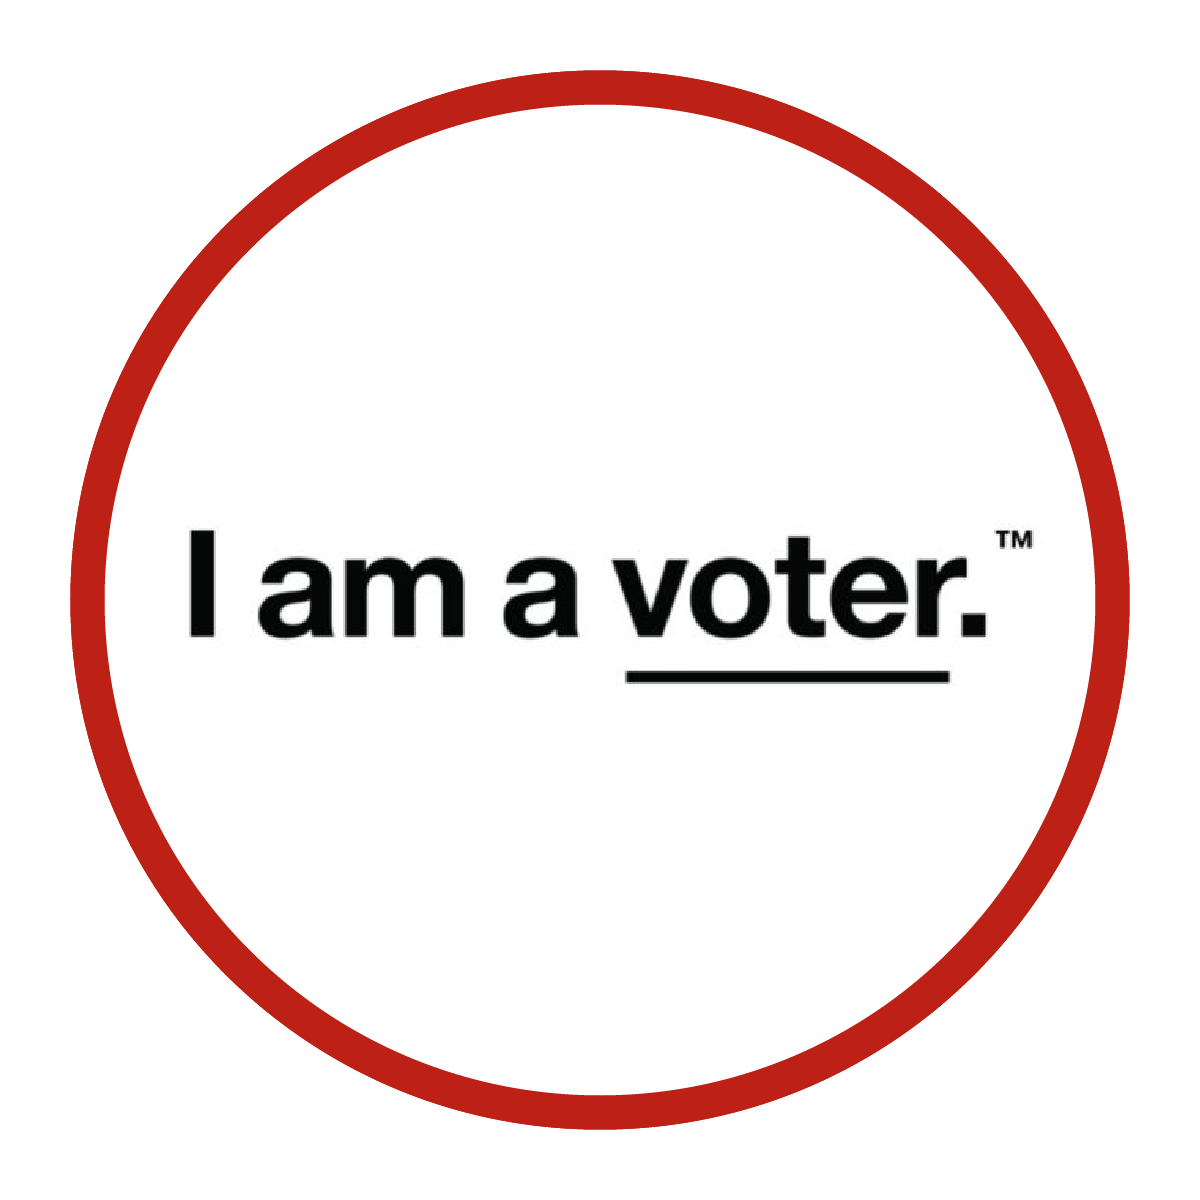 I am voter_profile-01.png